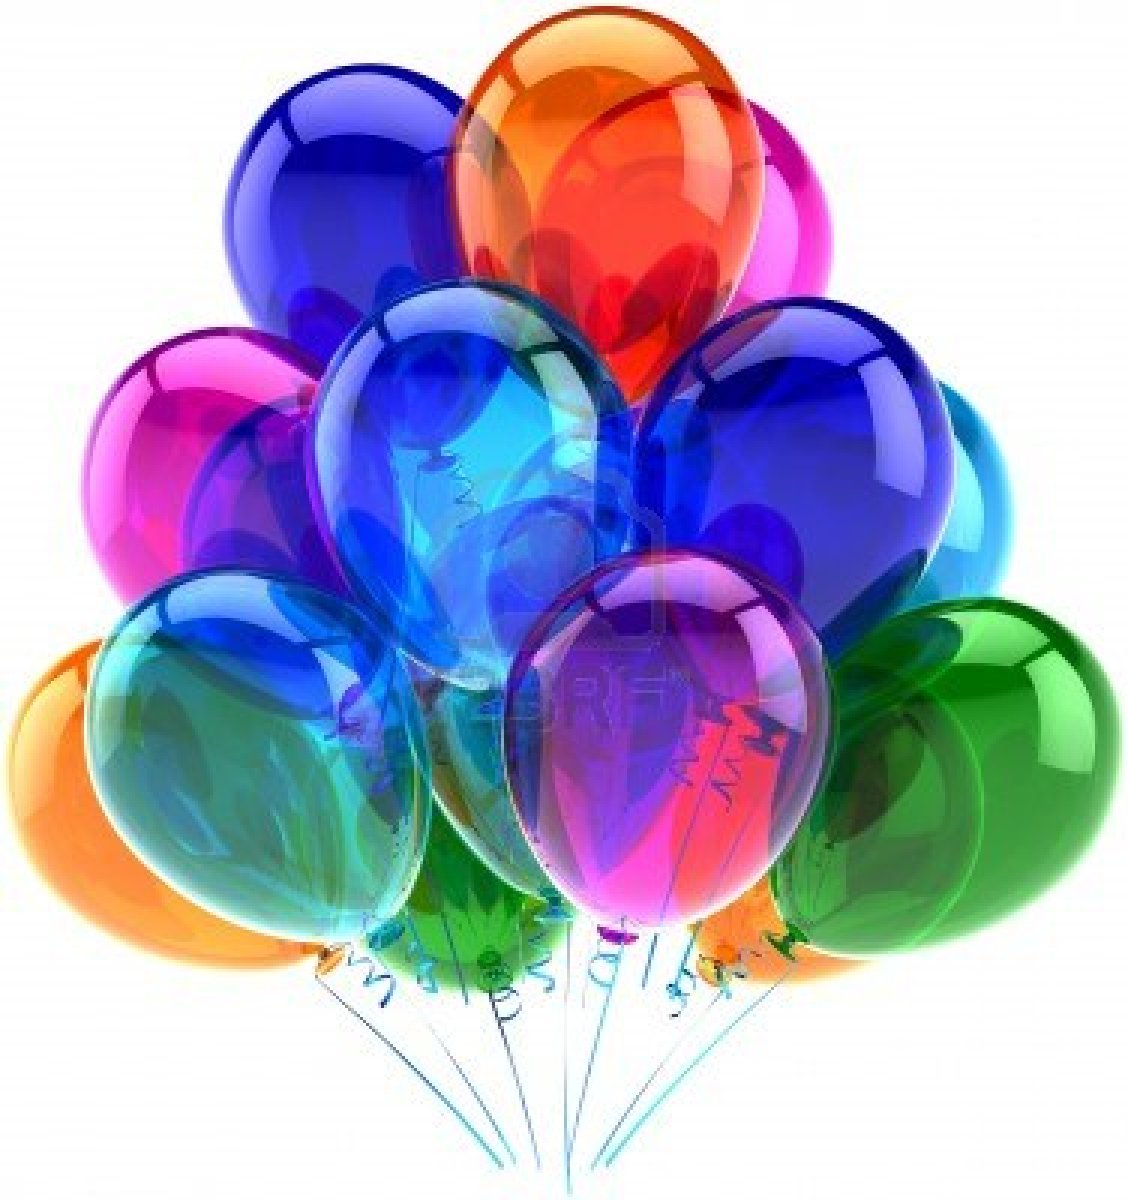 16257197-balloons-party-happy-birthday-decoration-colorful-translucent-joy-fun-positive-emotion-abstract-holi.jpg